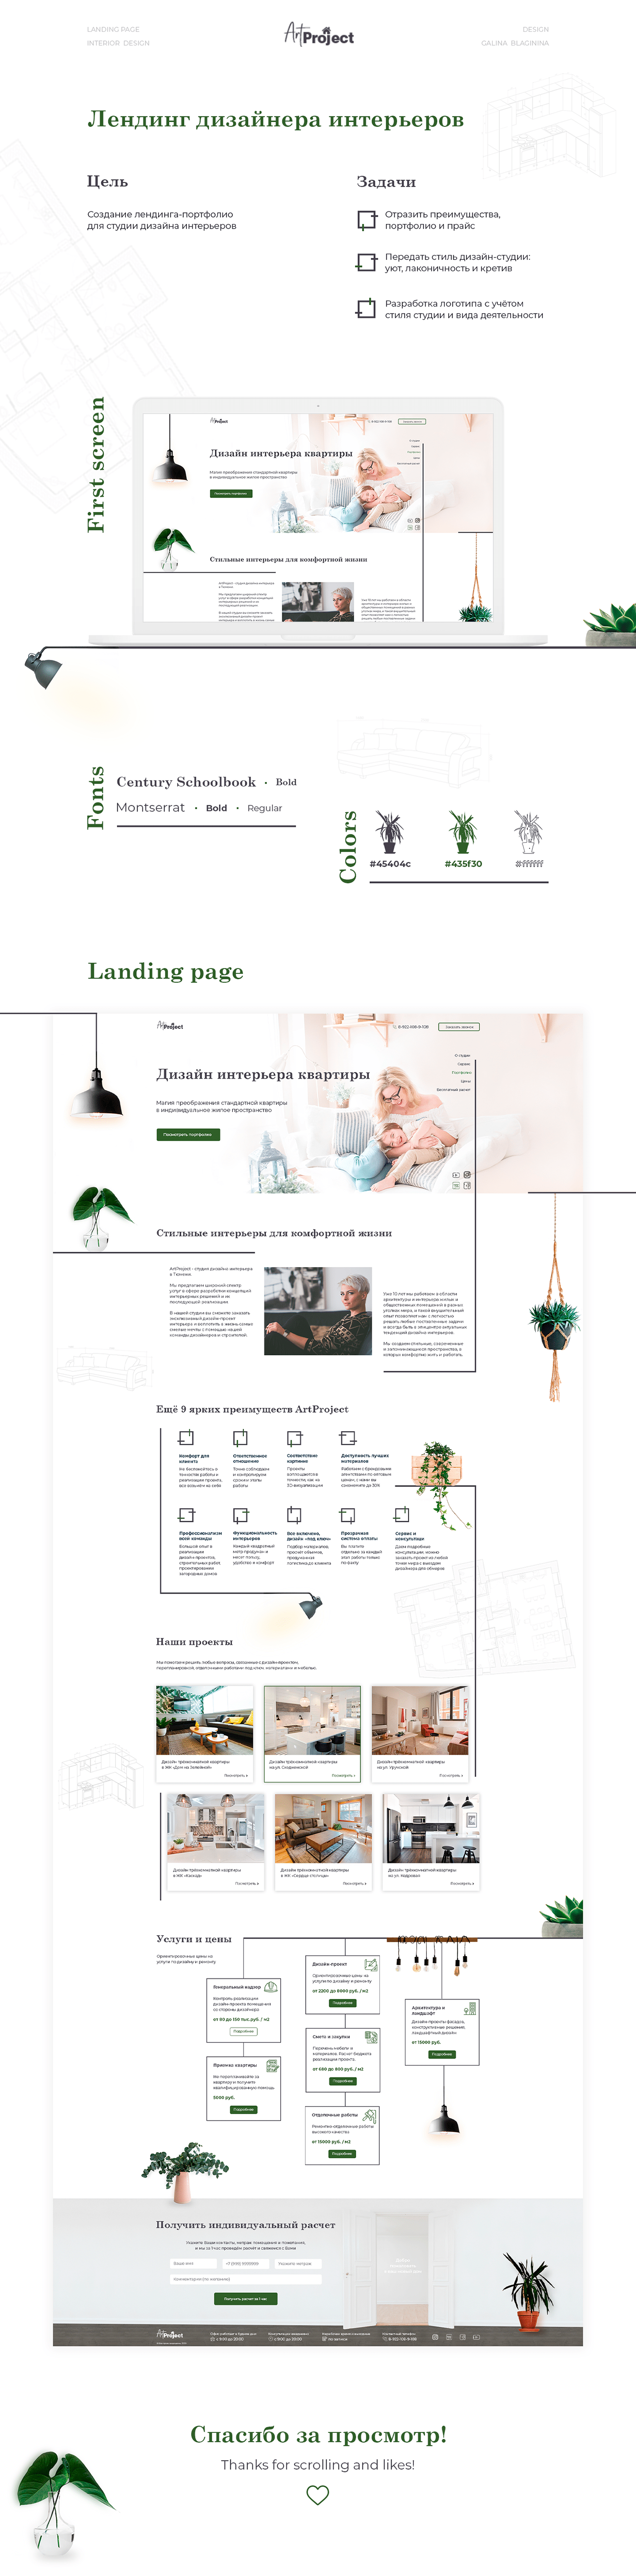 landing page logo portfolio site web-design дизайн интерьера дизайн студия лендинг логотип портфолио